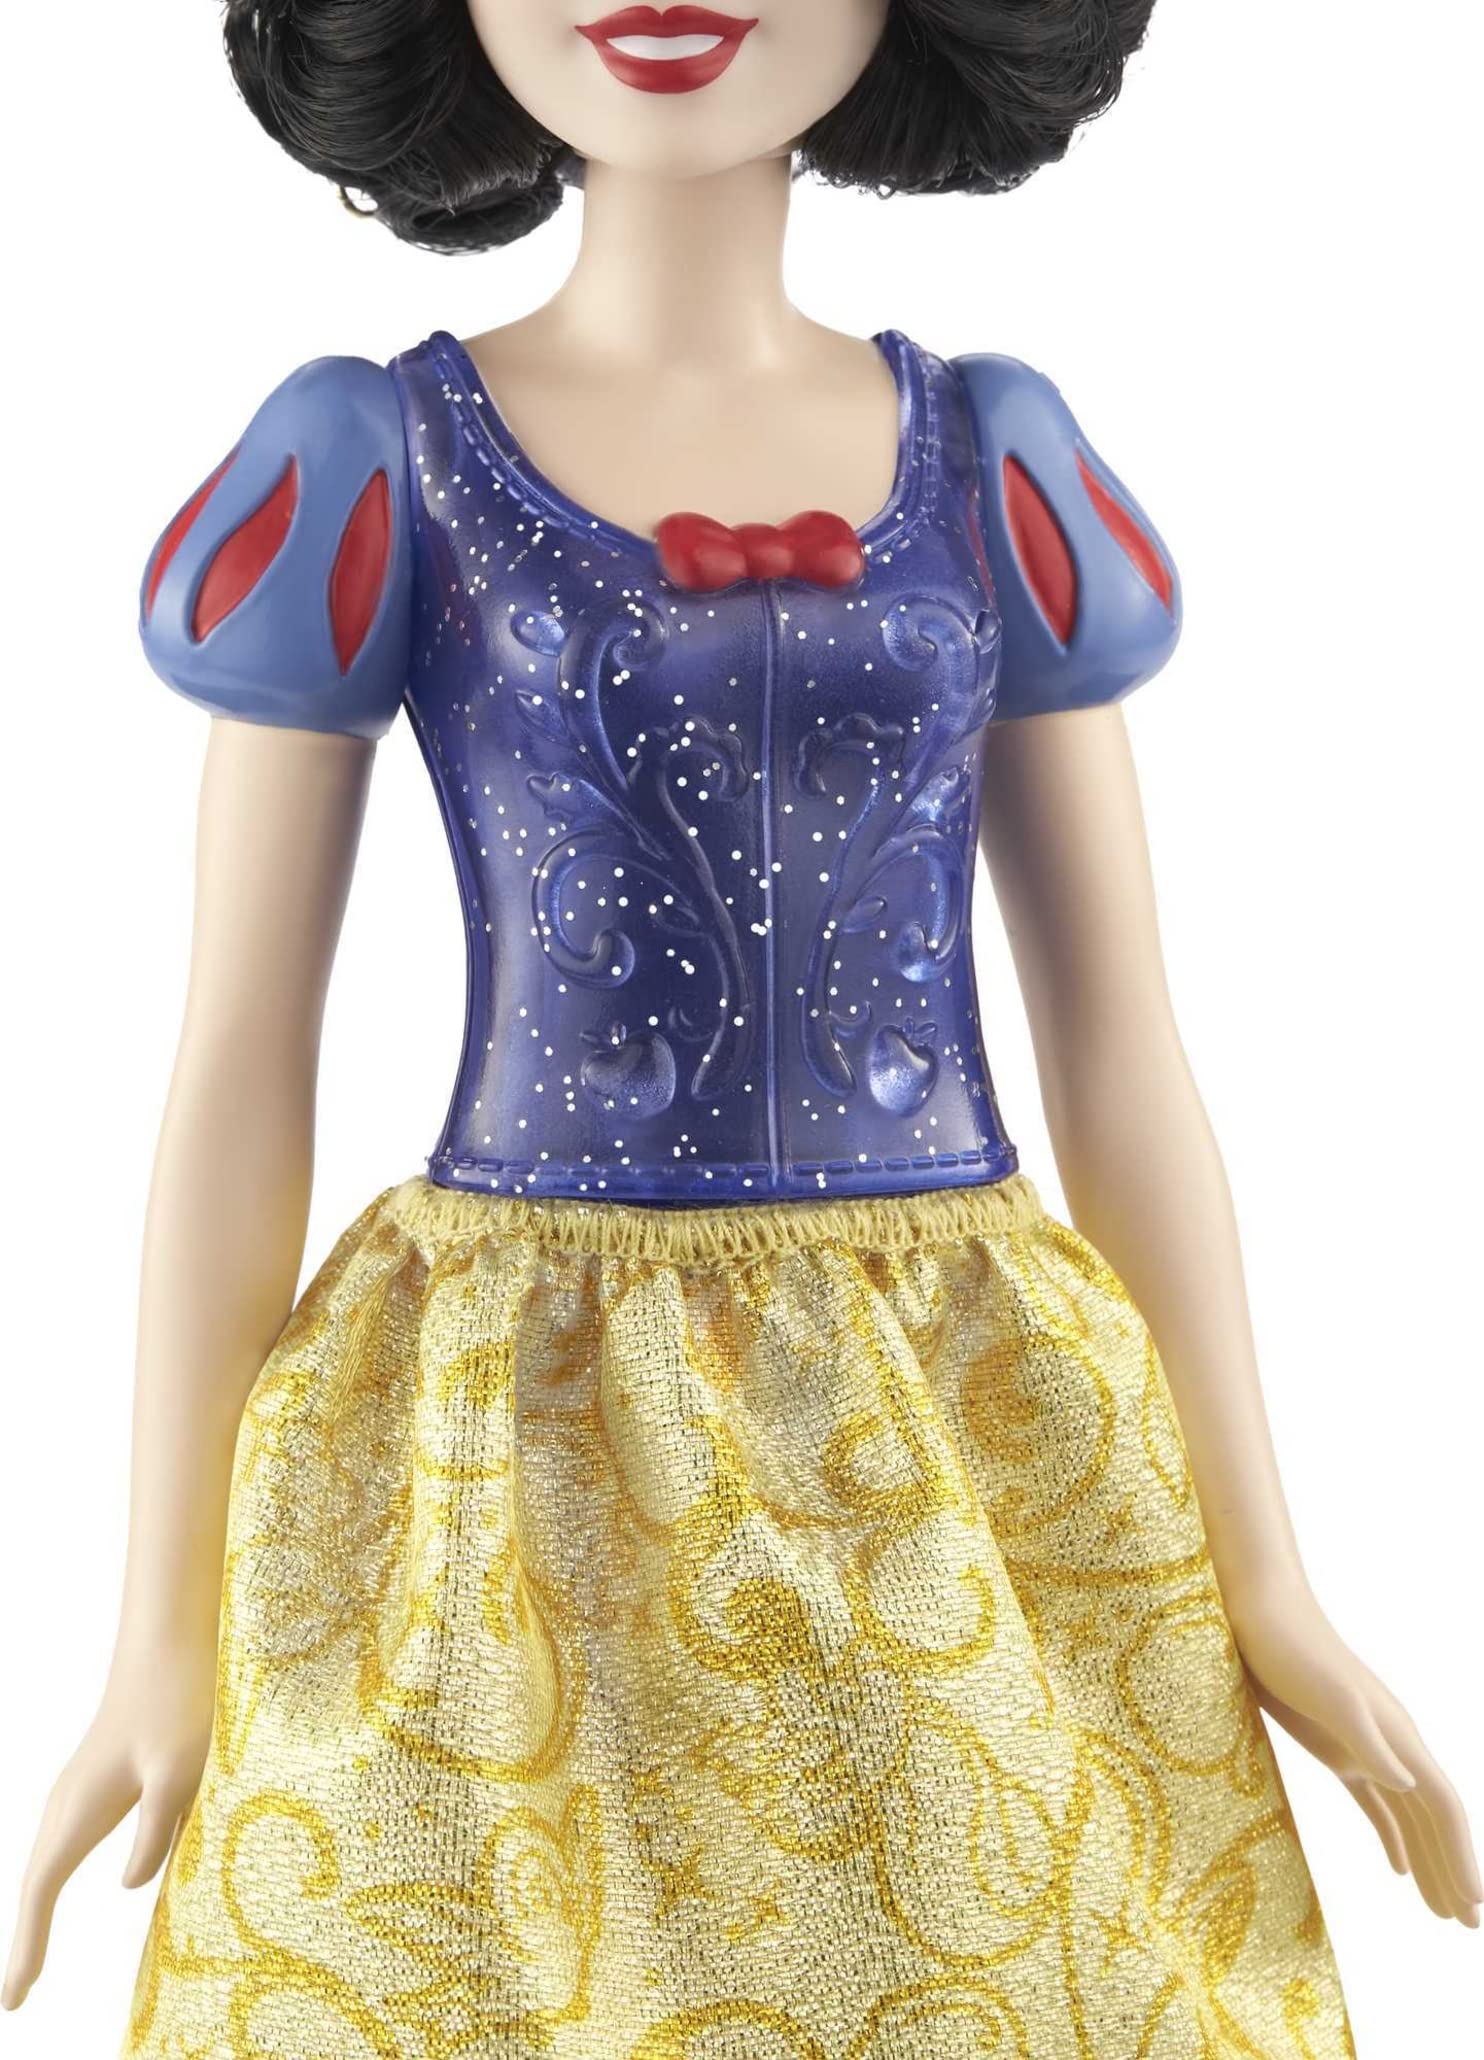 Mattel Disney Princess Snow White Fashion Doll, Sparkling Look with Black Hair, Brown Eyes & Hair Accessory